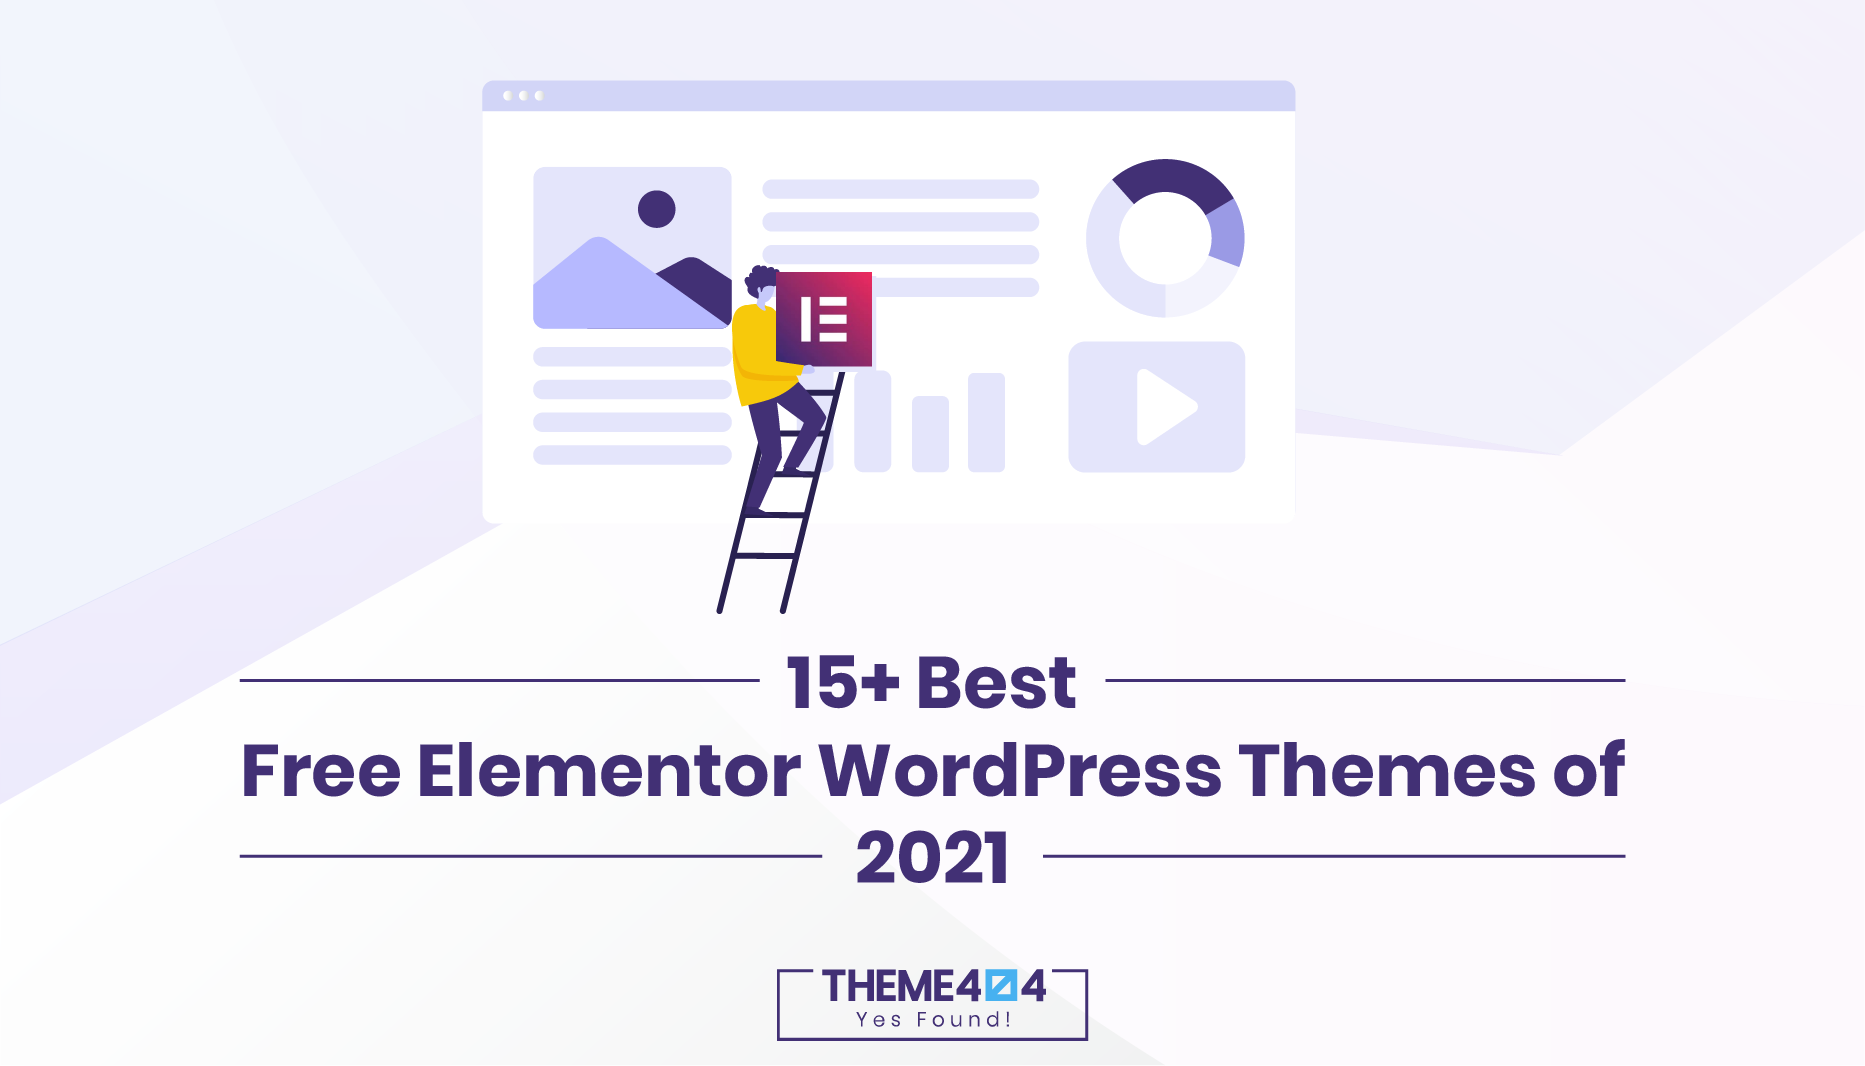 15+ Best Free Elementor WordPress Themes of 2021